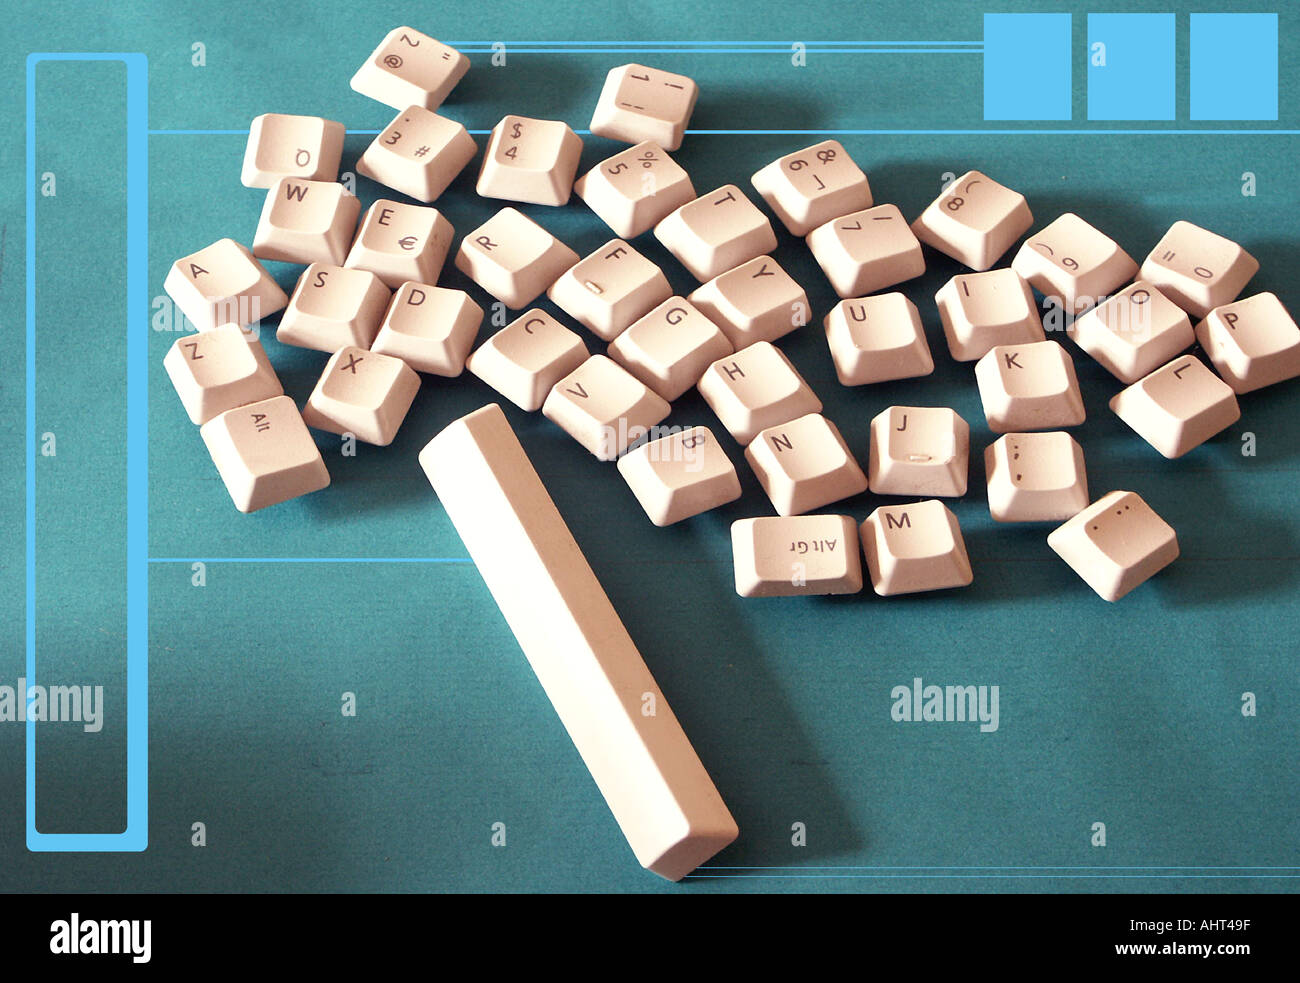 så sej Ithaca keyboard keys mixed up pattern Stock Photo - Alamy